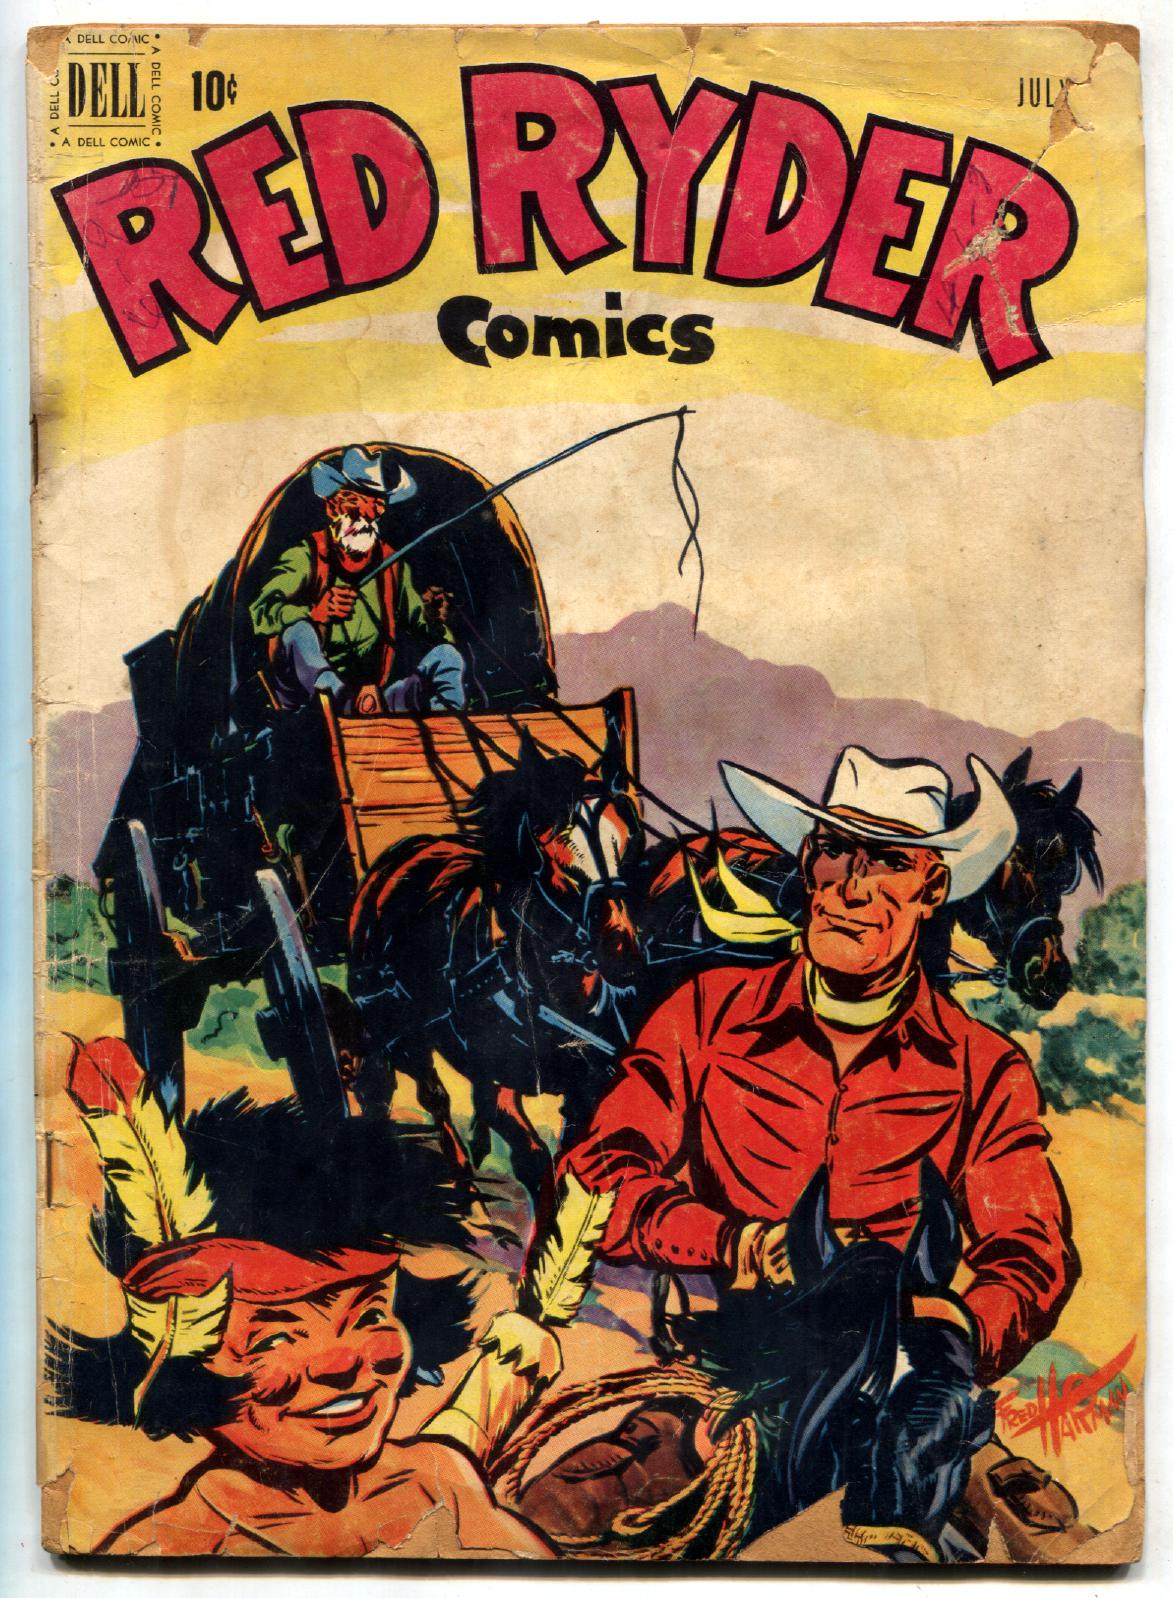 Red rider comic